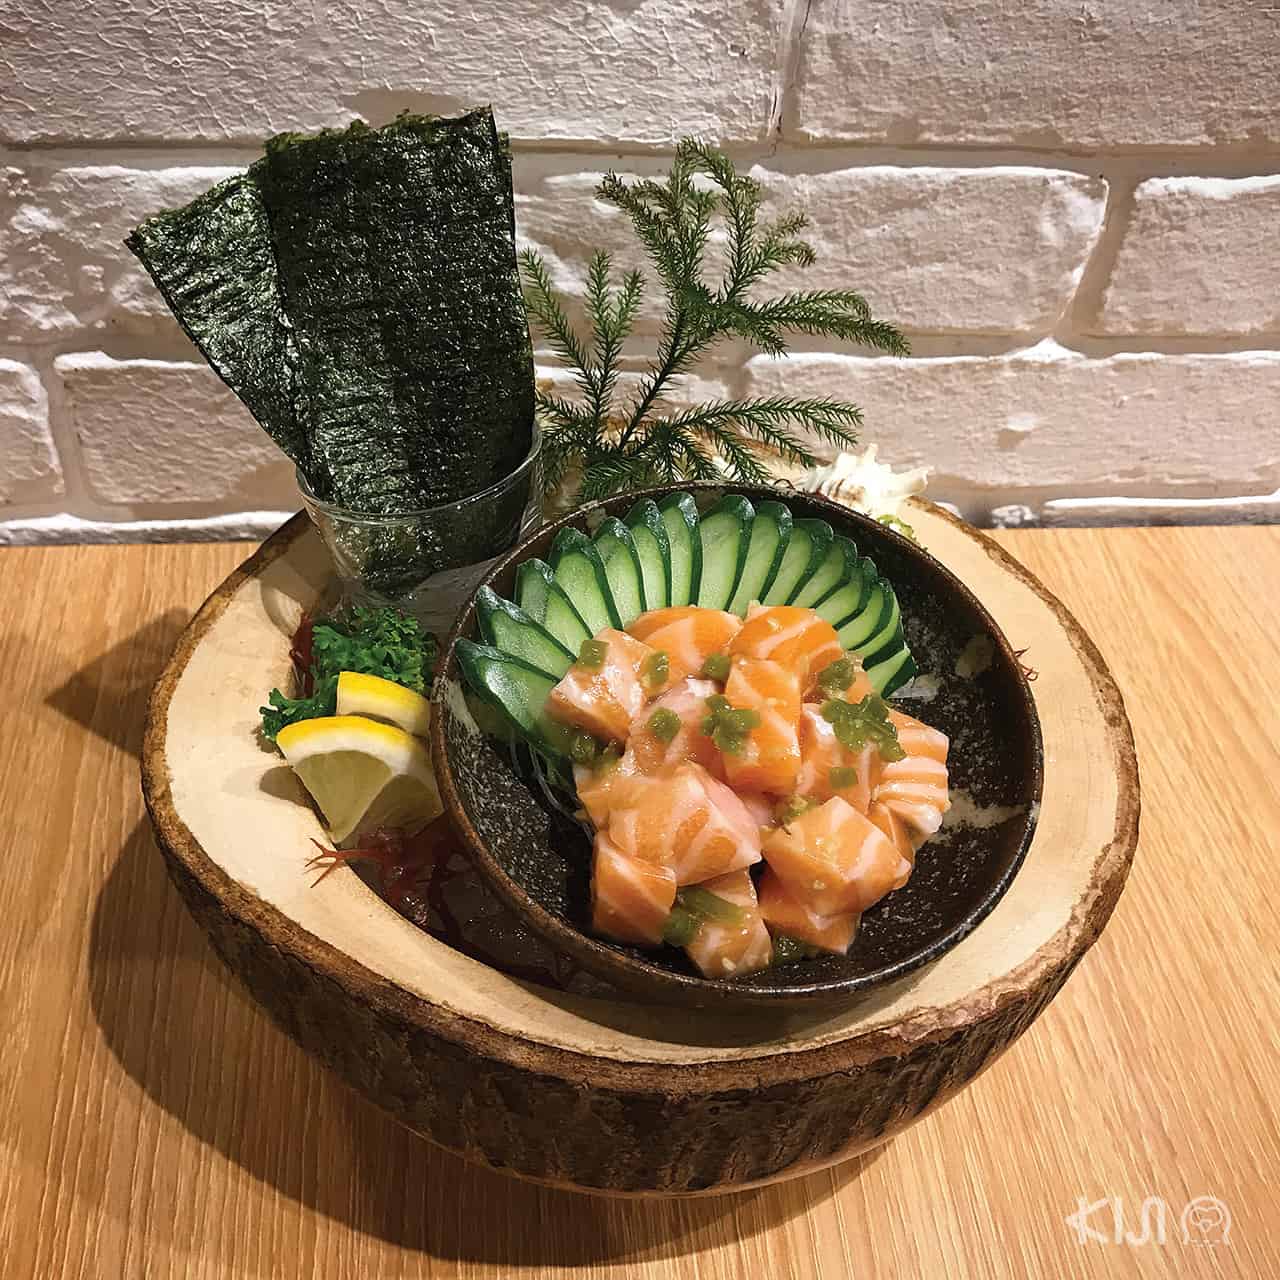 Tairyo Sushi and More